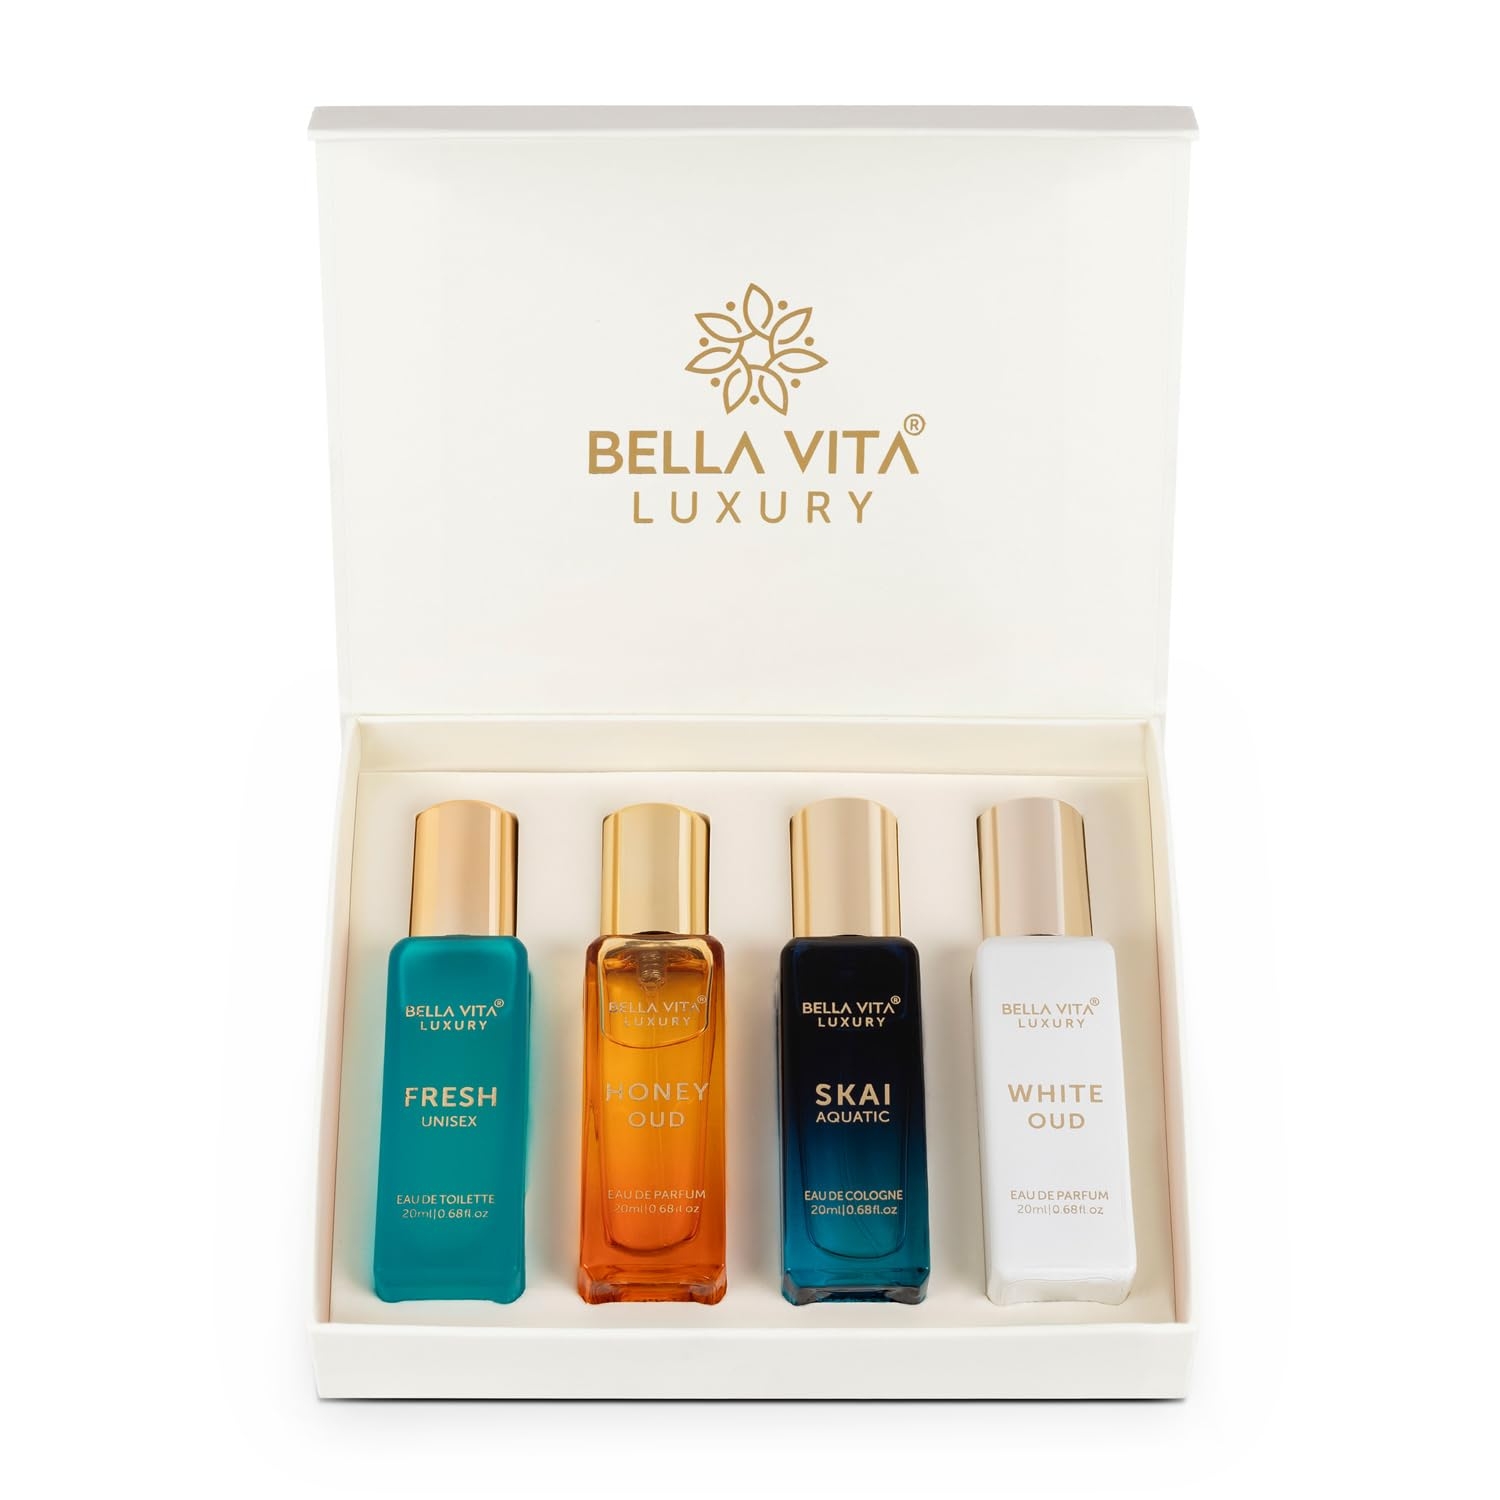 Bella Vita Luxury Unisex Eau De Parfum Set 4x20ml | SKAI, FRESH, WHITEOUD, HONEY OUD | Long Lasting EDP Fragrance Scent